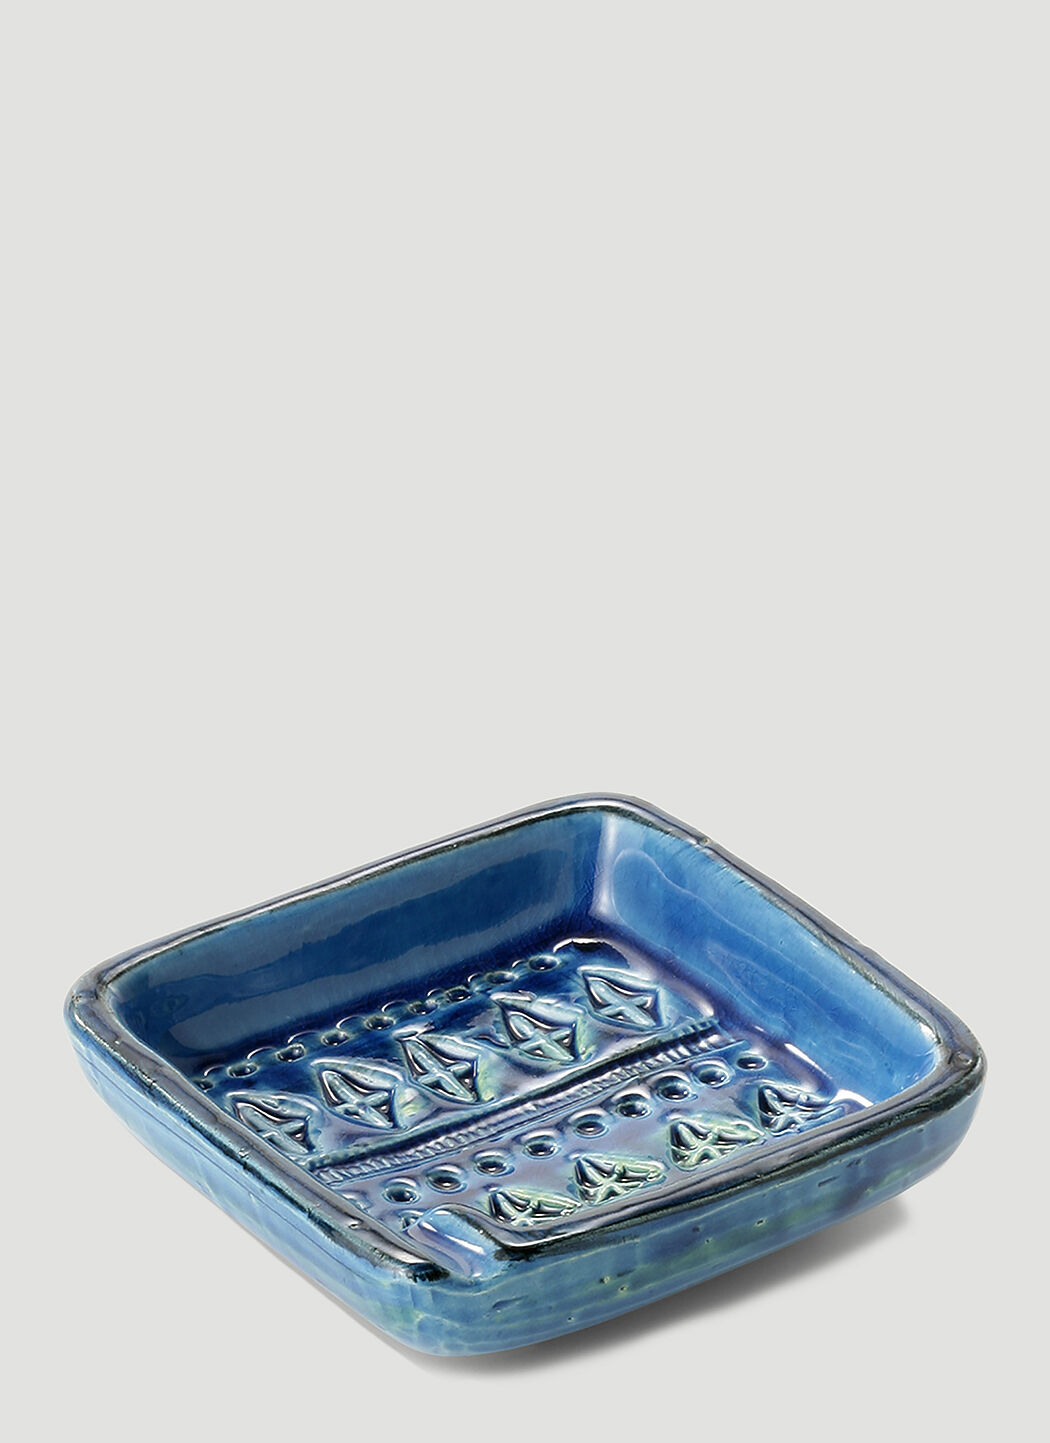 Bitossi Ceramiche Rimini Blu Squared Ashtray Blue wps0644263